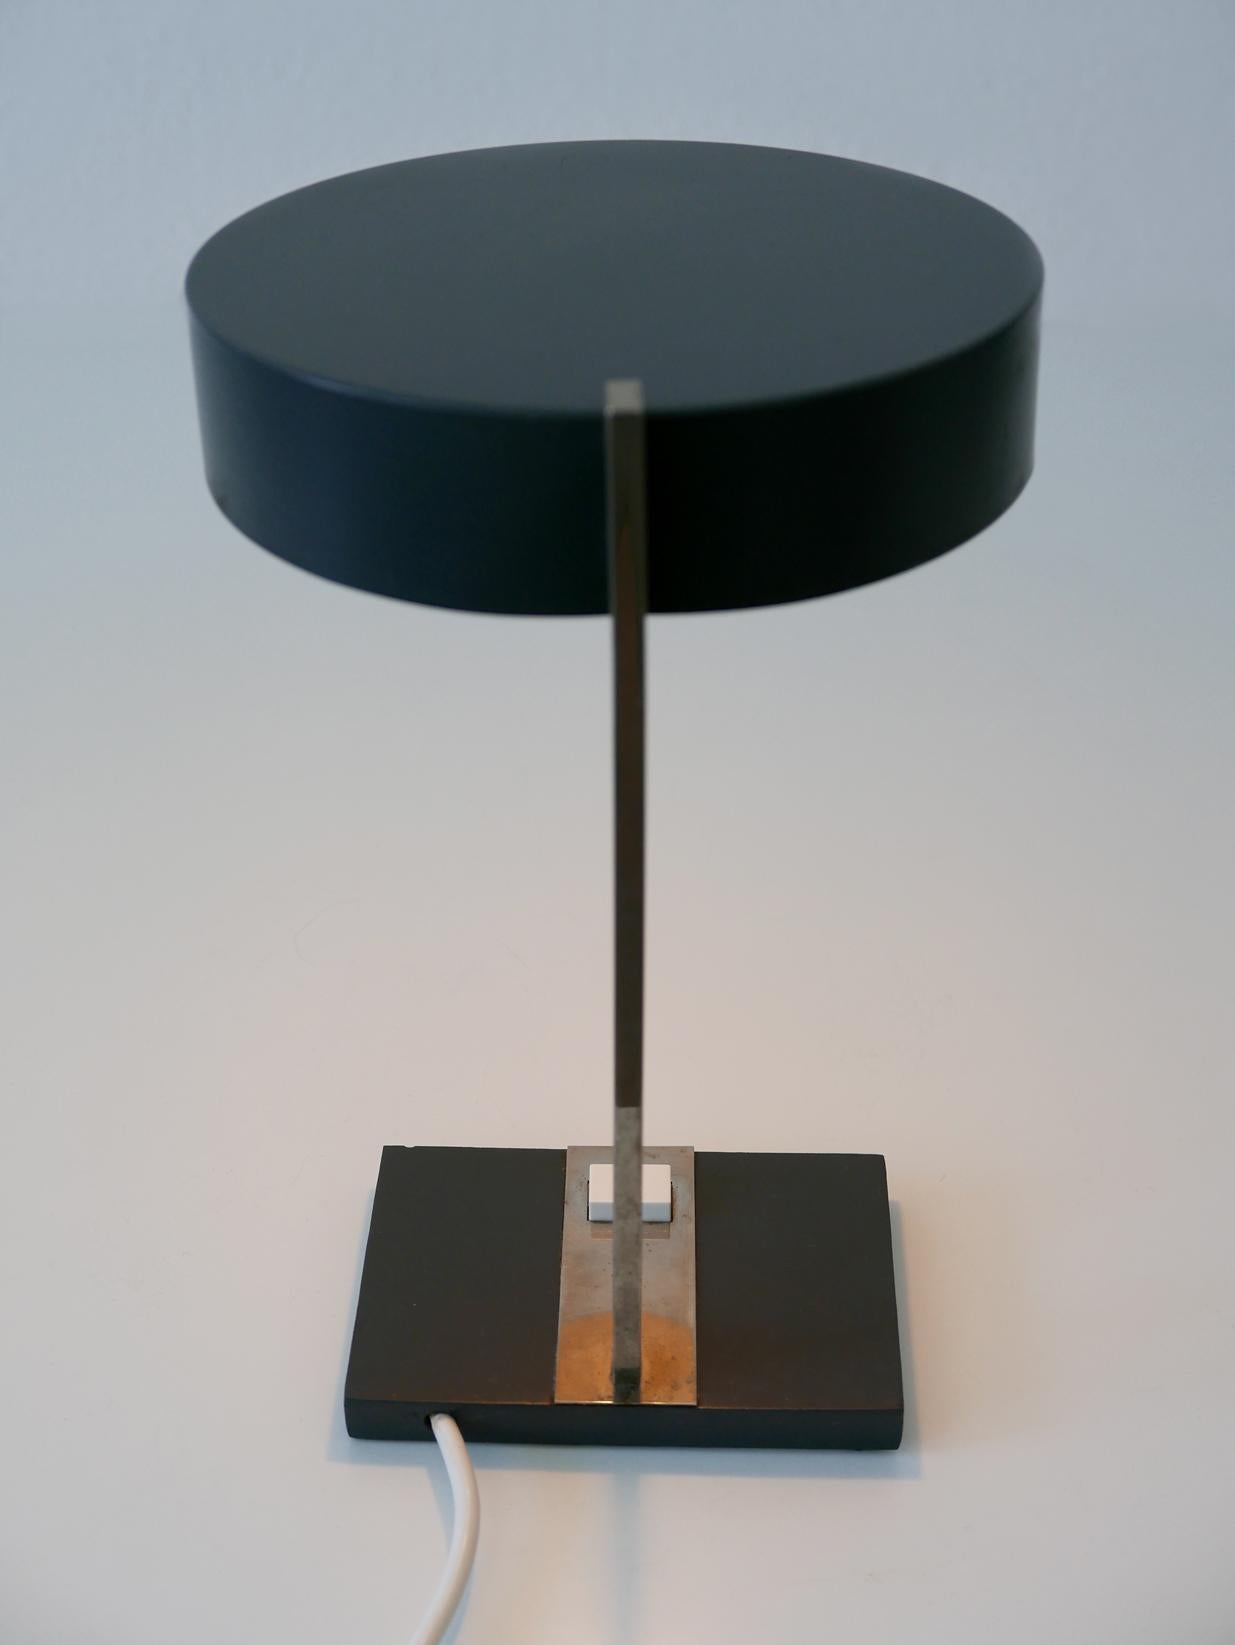 Elegant Mid-Century Modern Table Lamp or Desk Light by Hillebrand, 1960s Germany For Sale 7